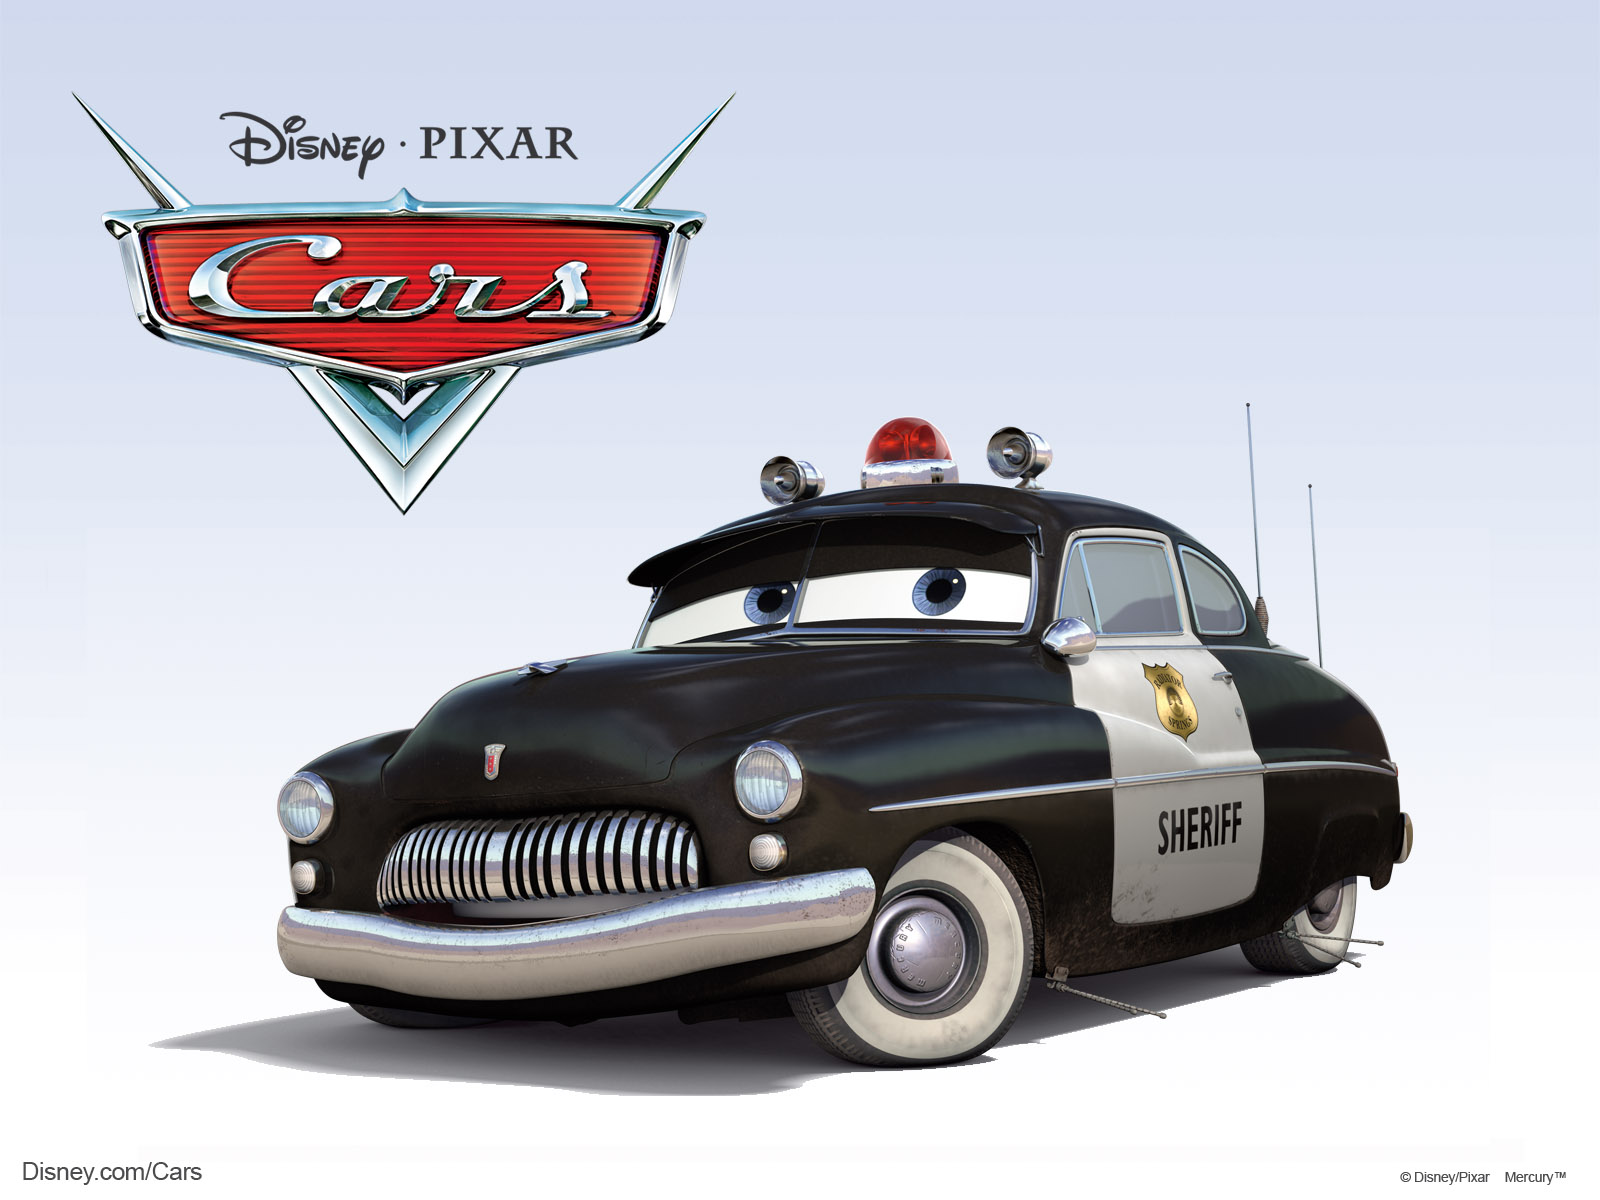 Sheriff The Police Car From Disney Pixar Cg Animated Movie Cars